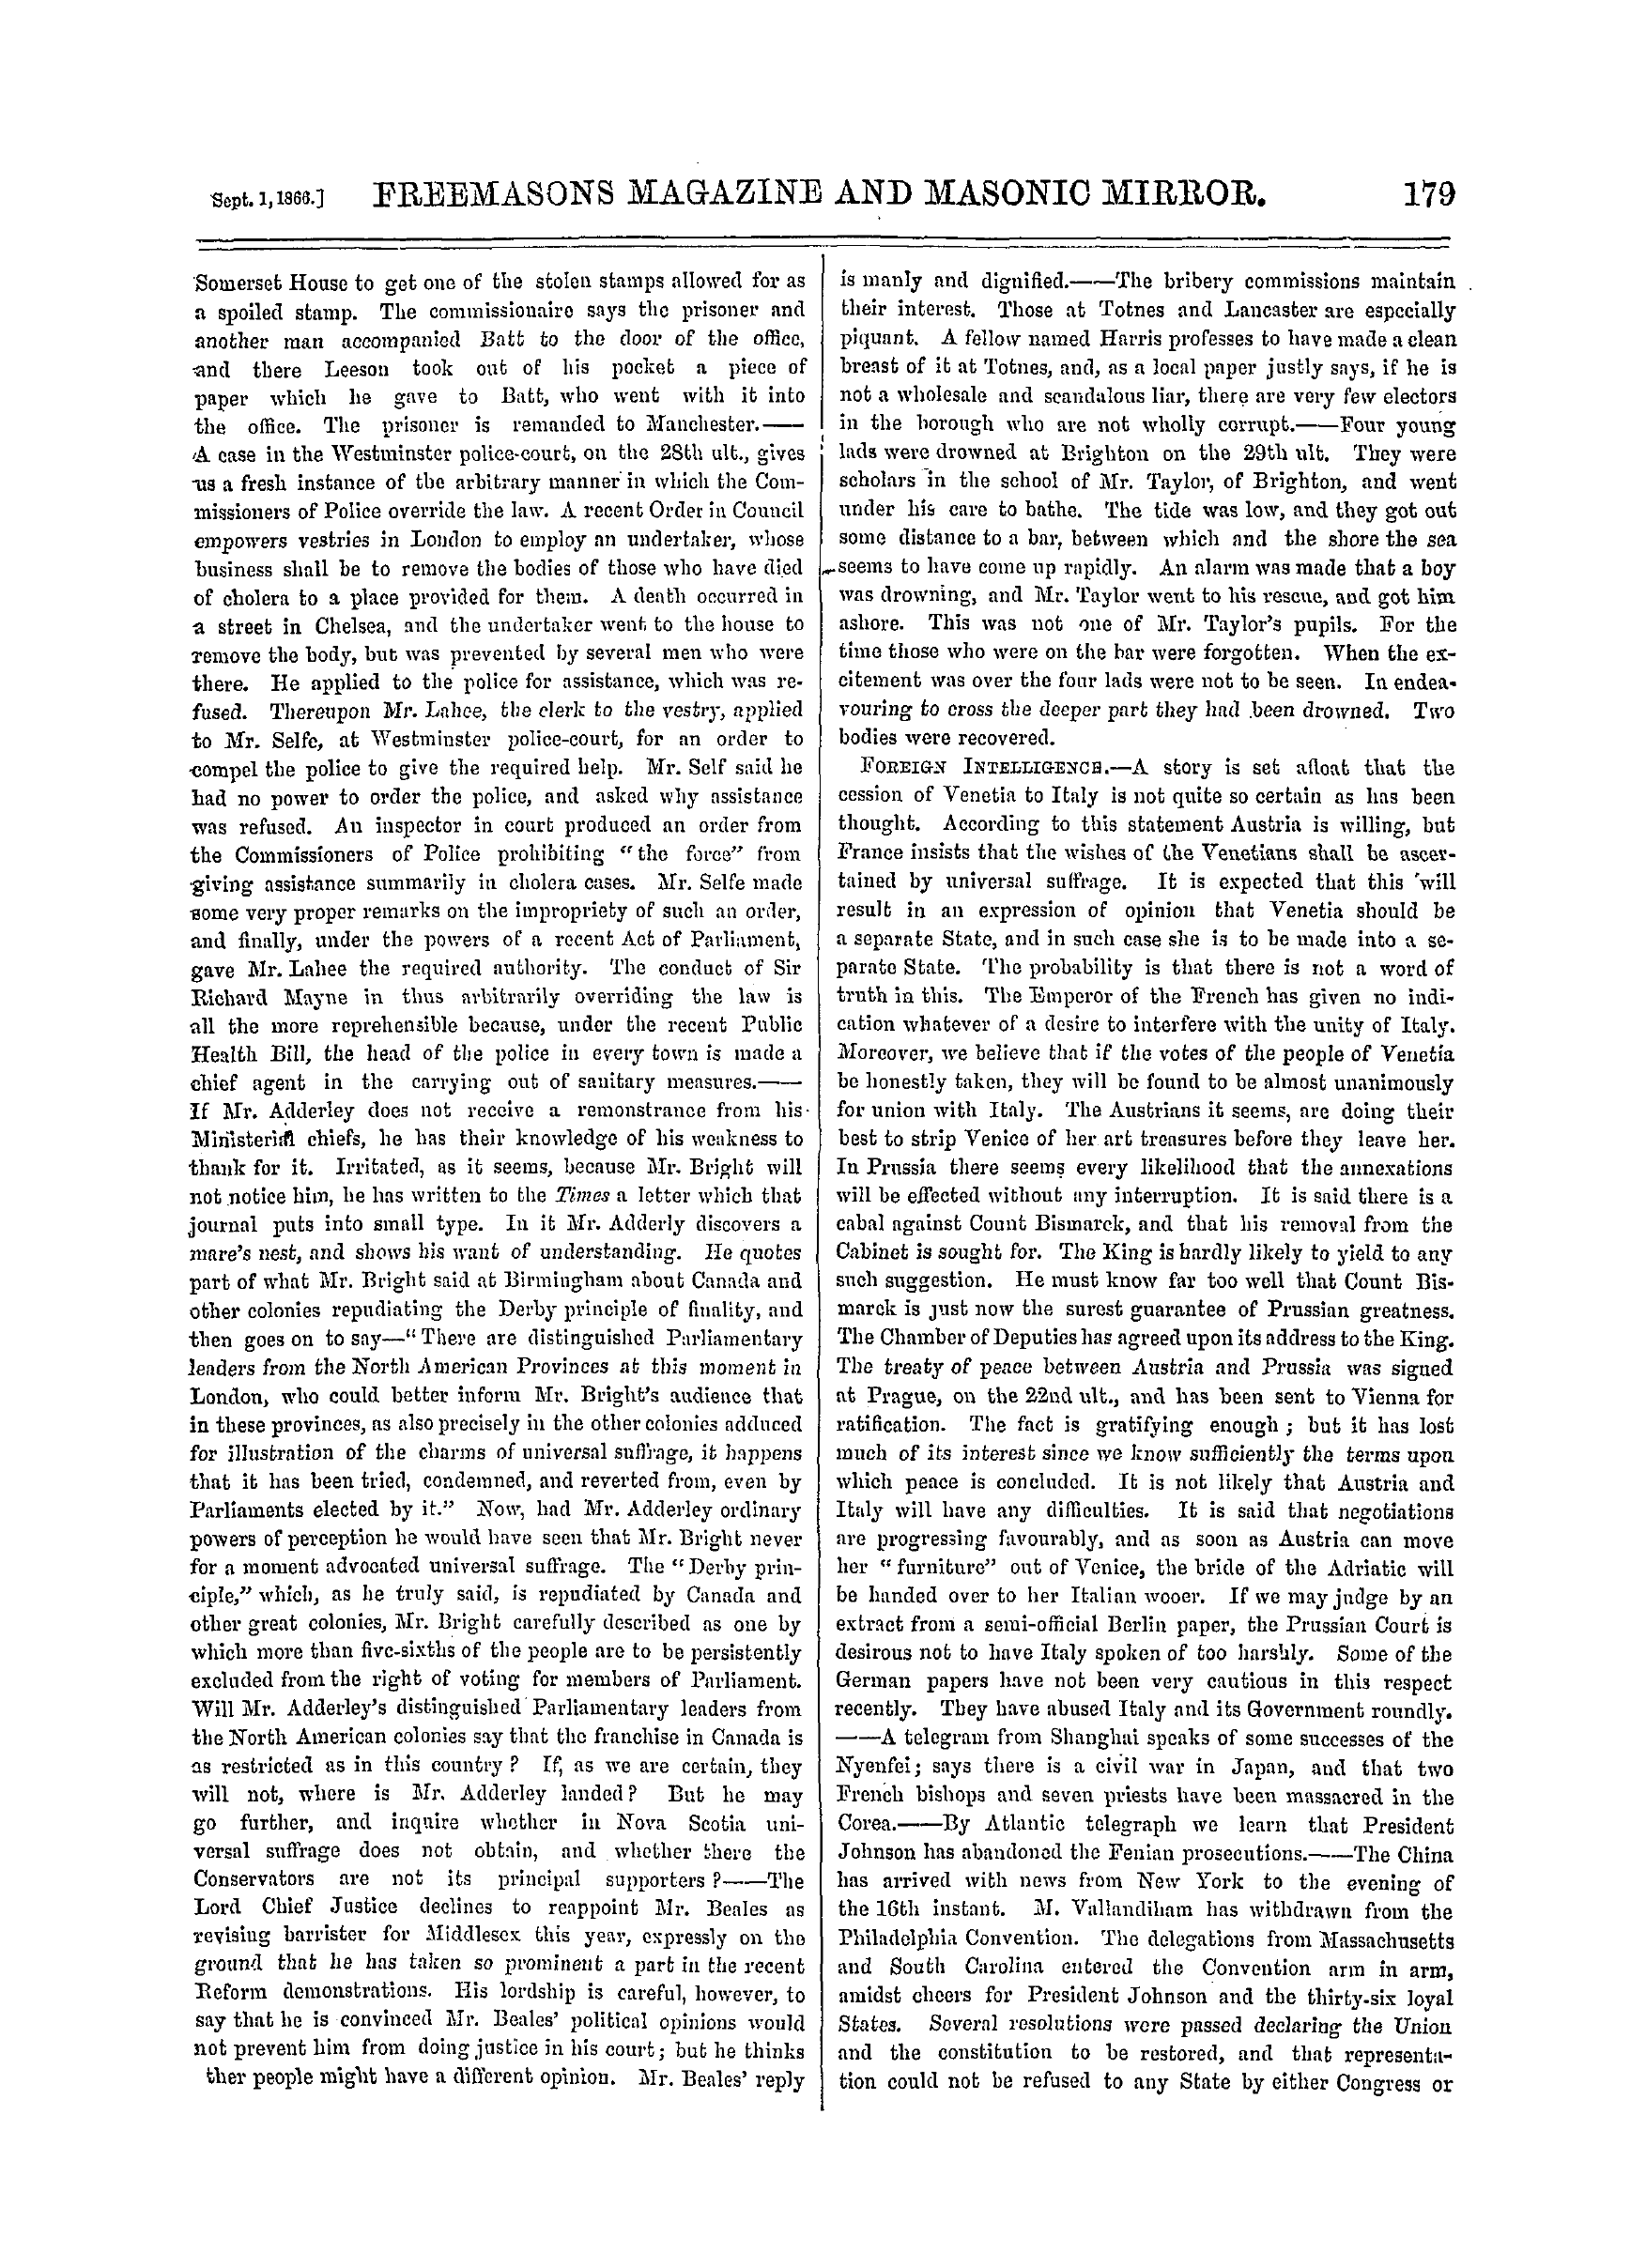 The Freemasons' Monthly Magazine: 1866-09-01 - The Week.